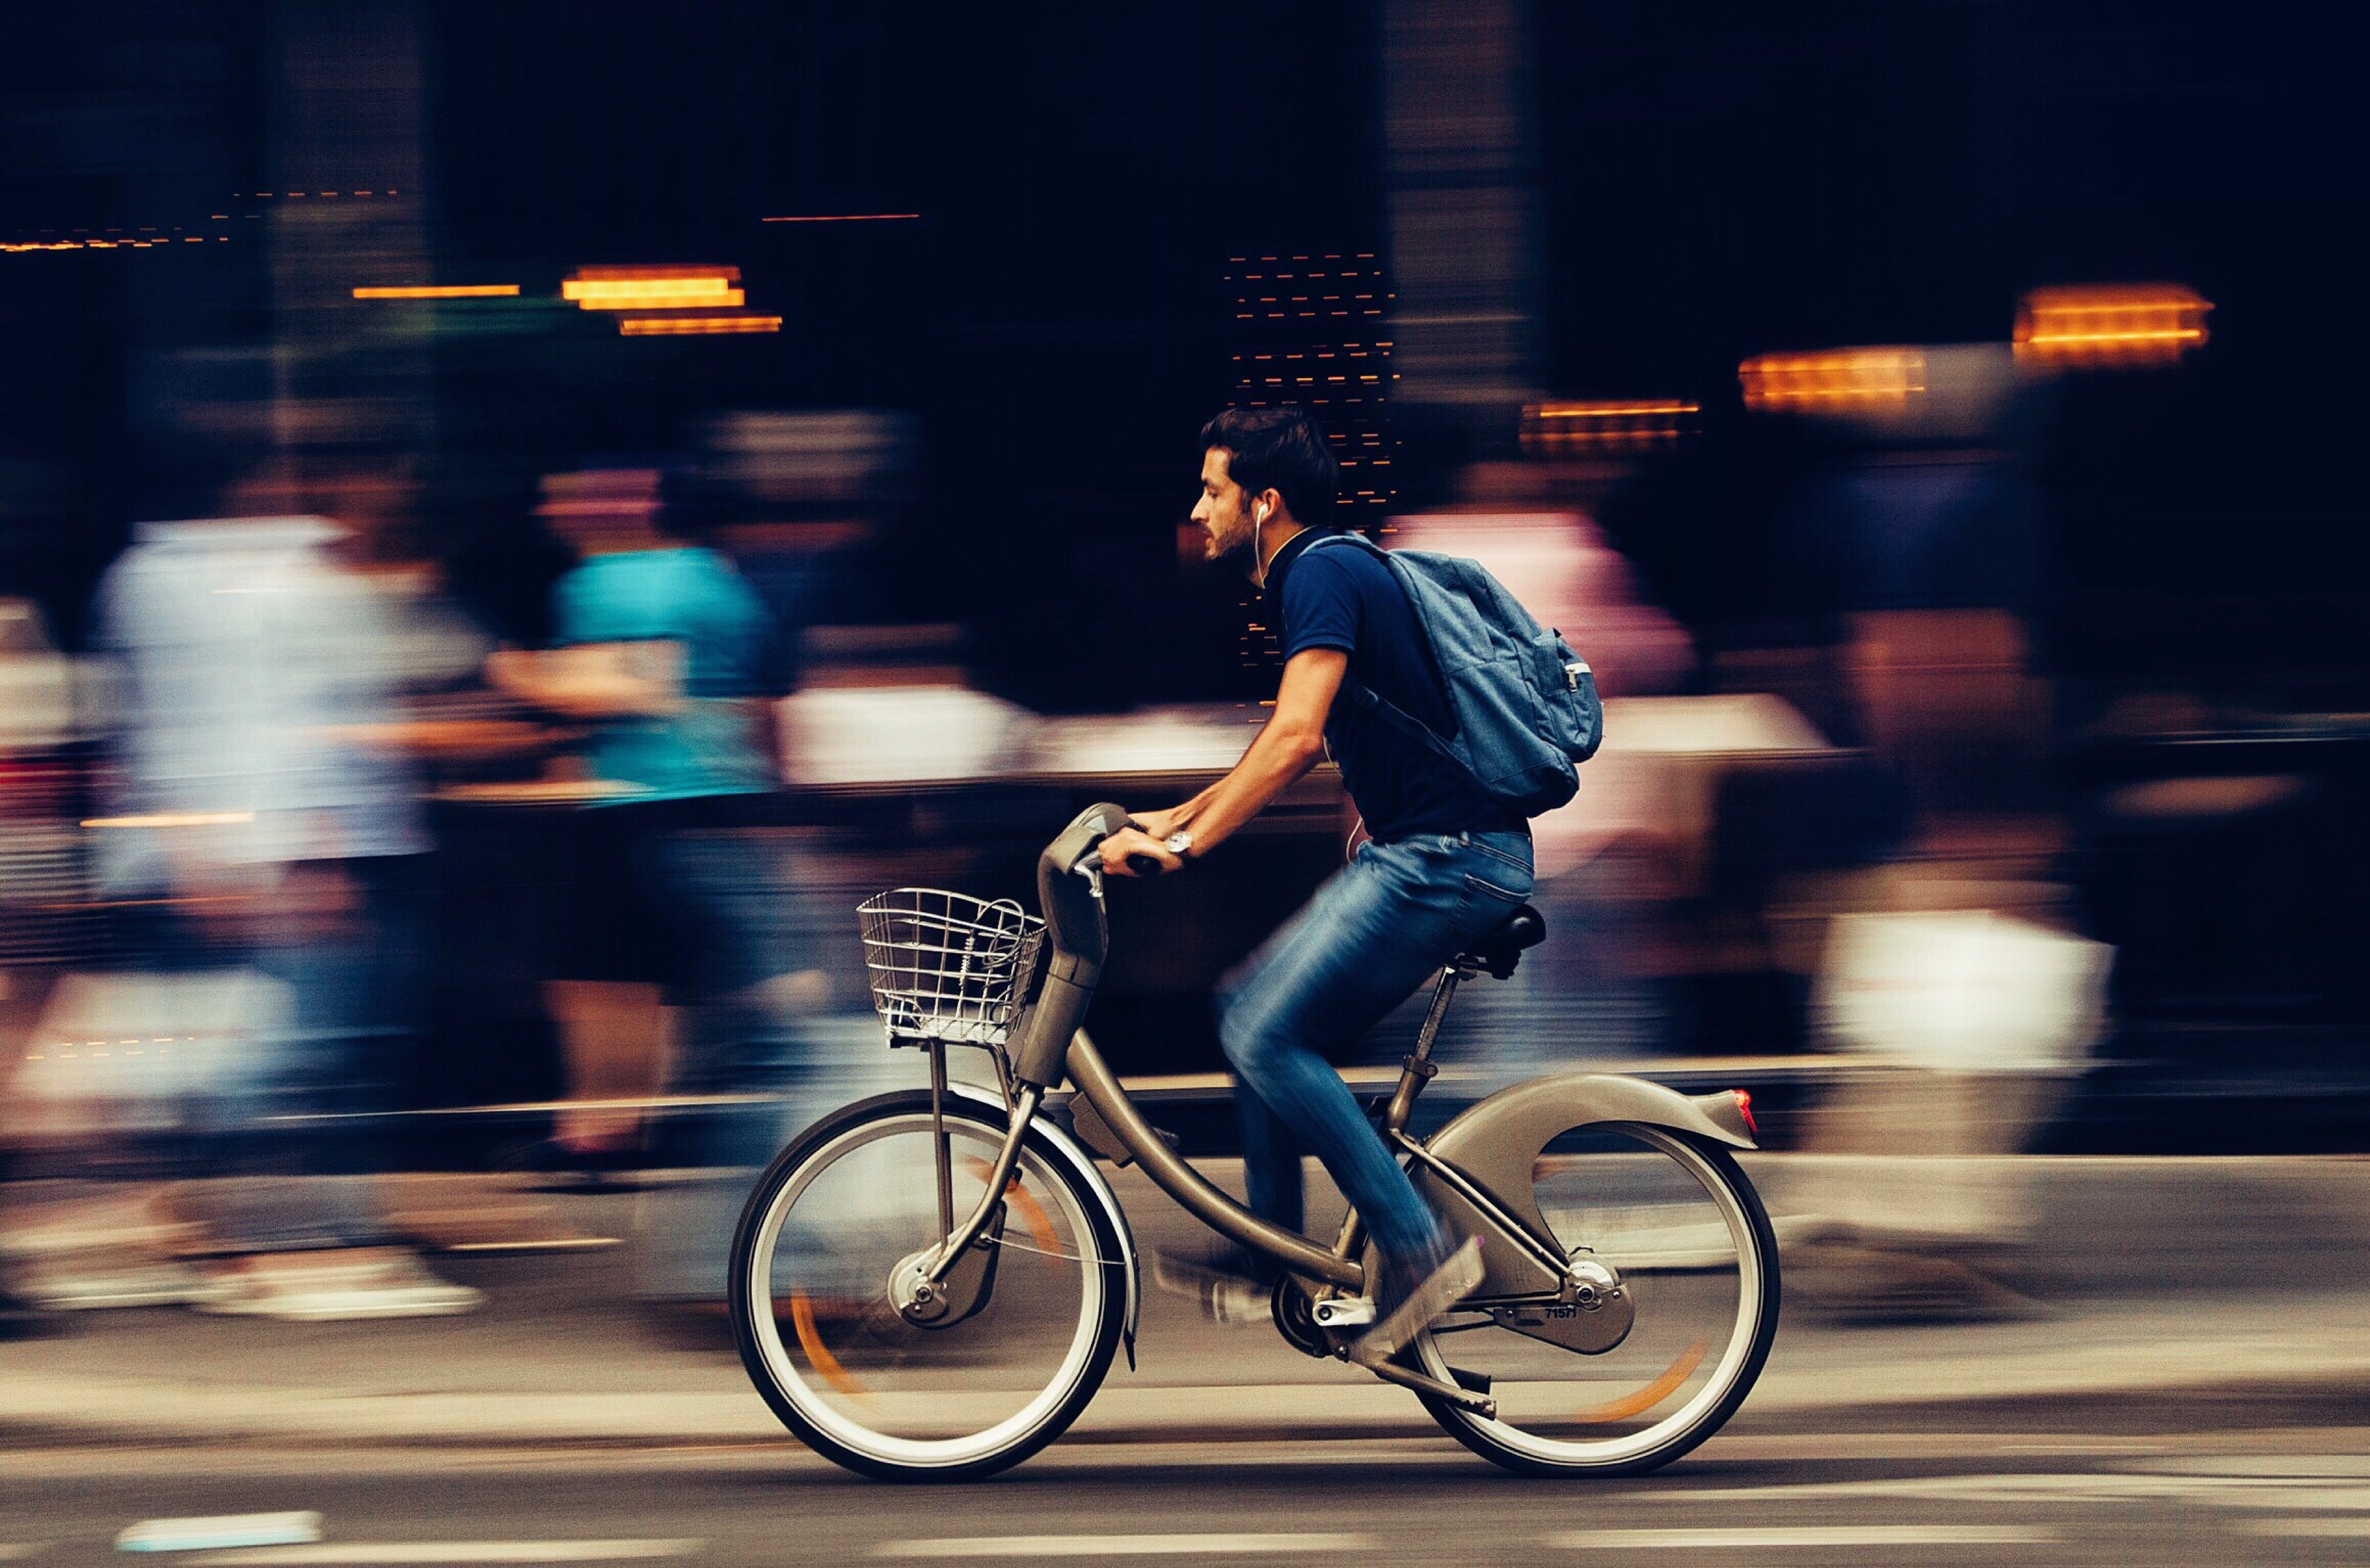 Man riding bicycle on city street photo